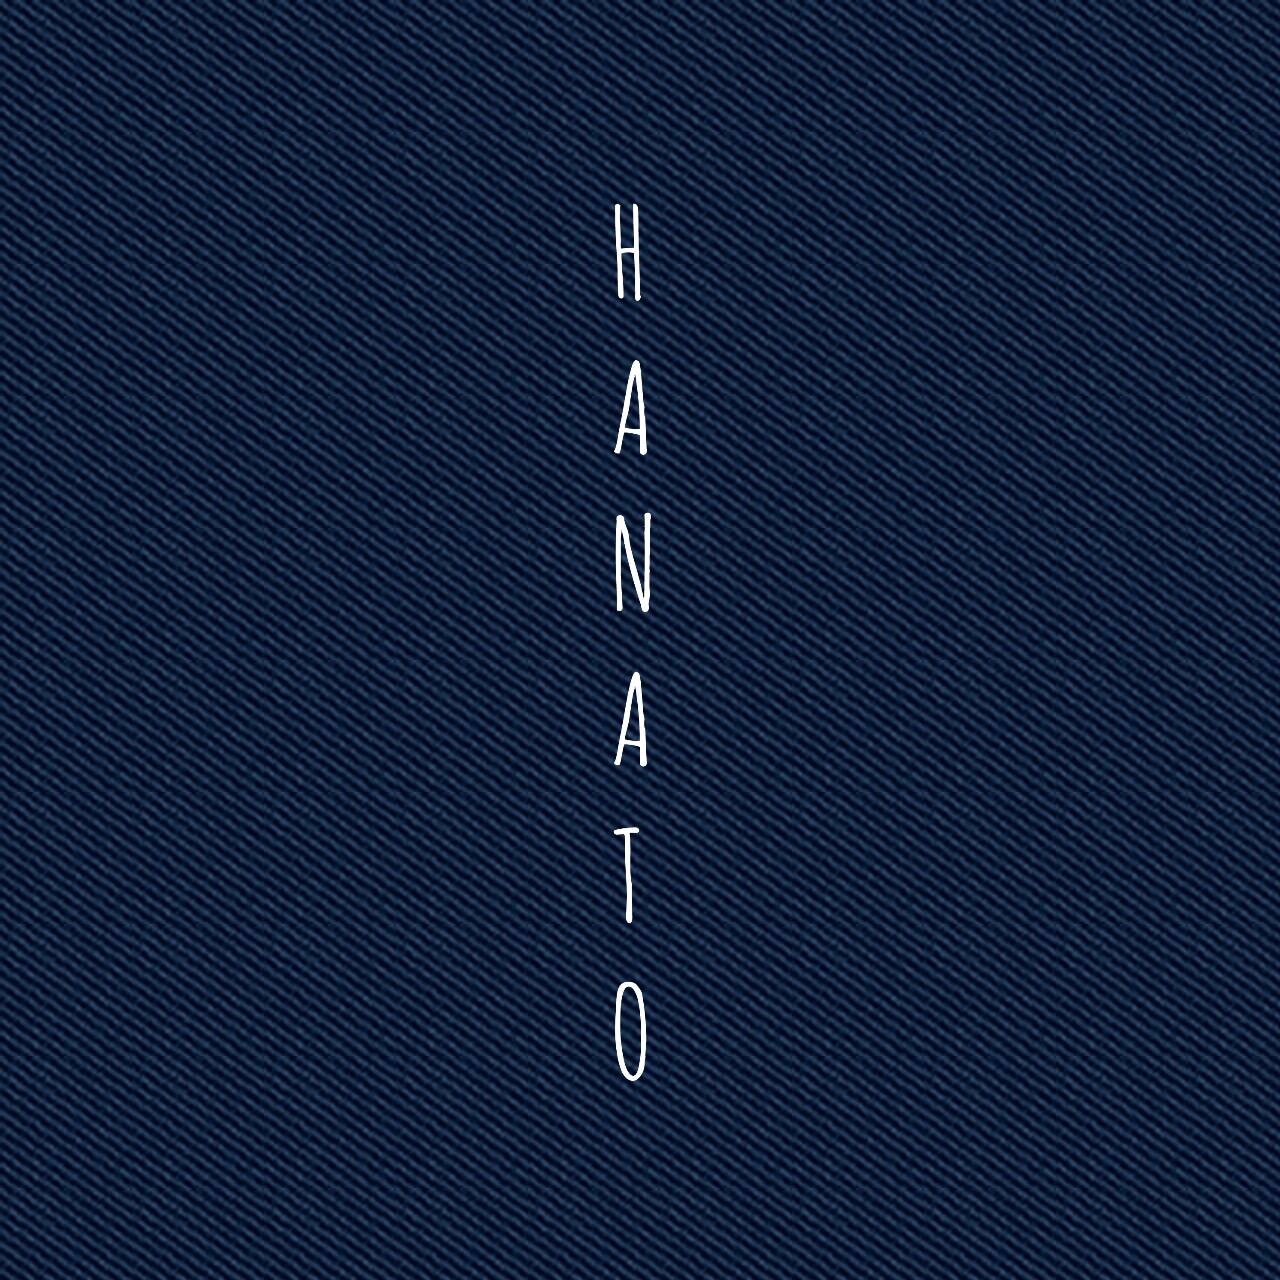 hanato-ハンドメイド雑貨店